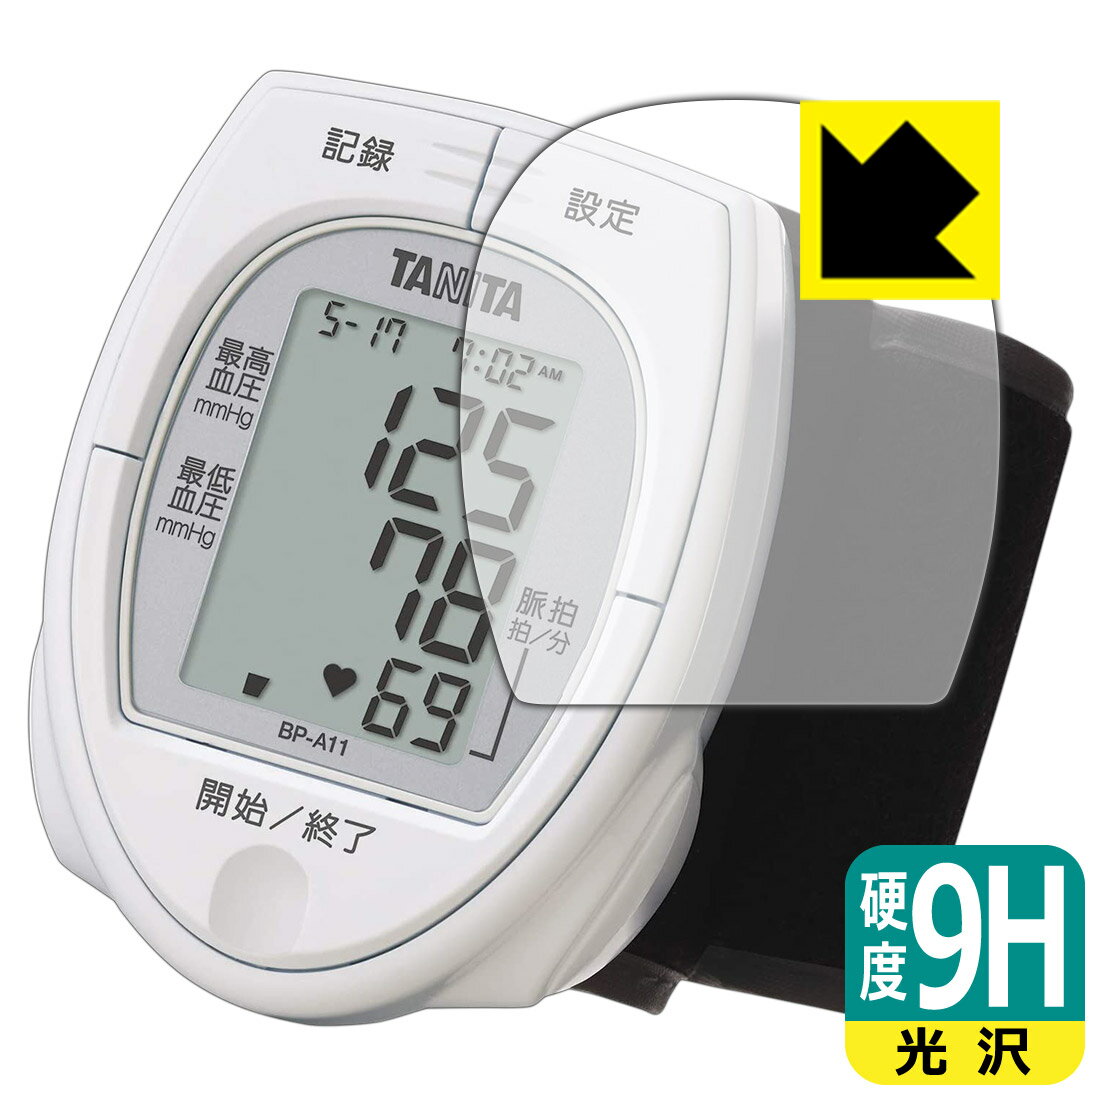 9H高硬度保護フィルム タニタ手首式血圧計 BP-A11 用 日本製 自社製造直販 